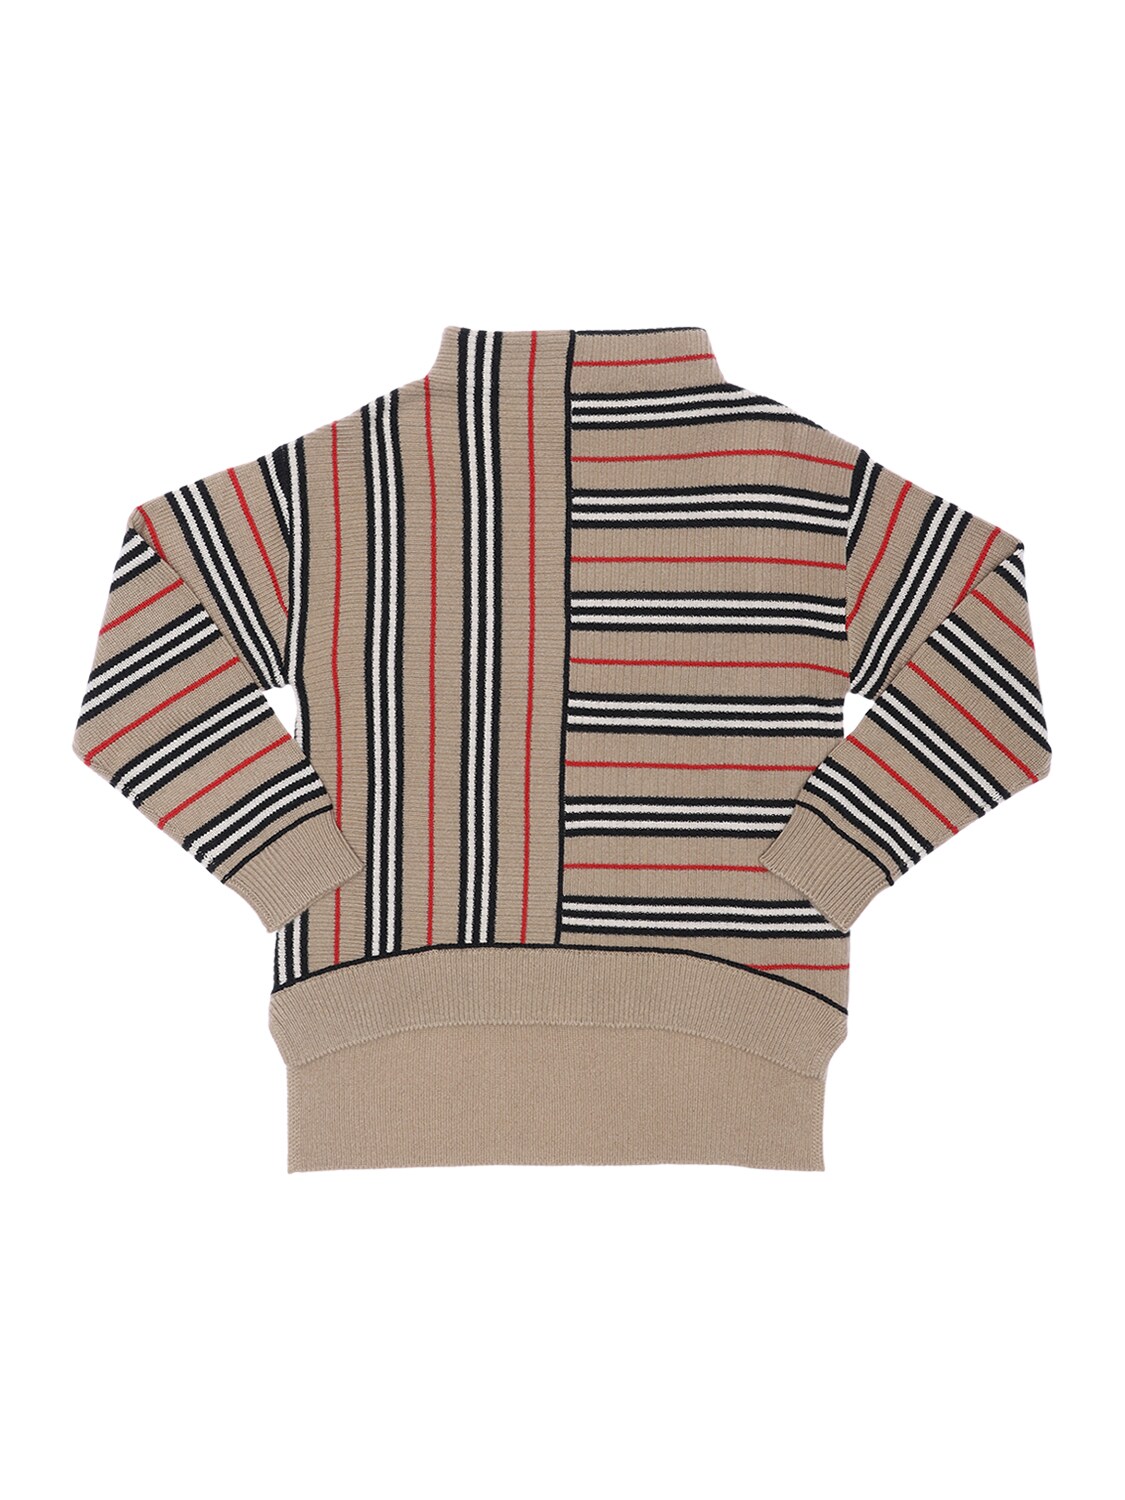 Burberry Kids' Stripe Print Wool & Cashmere Knit In Beige